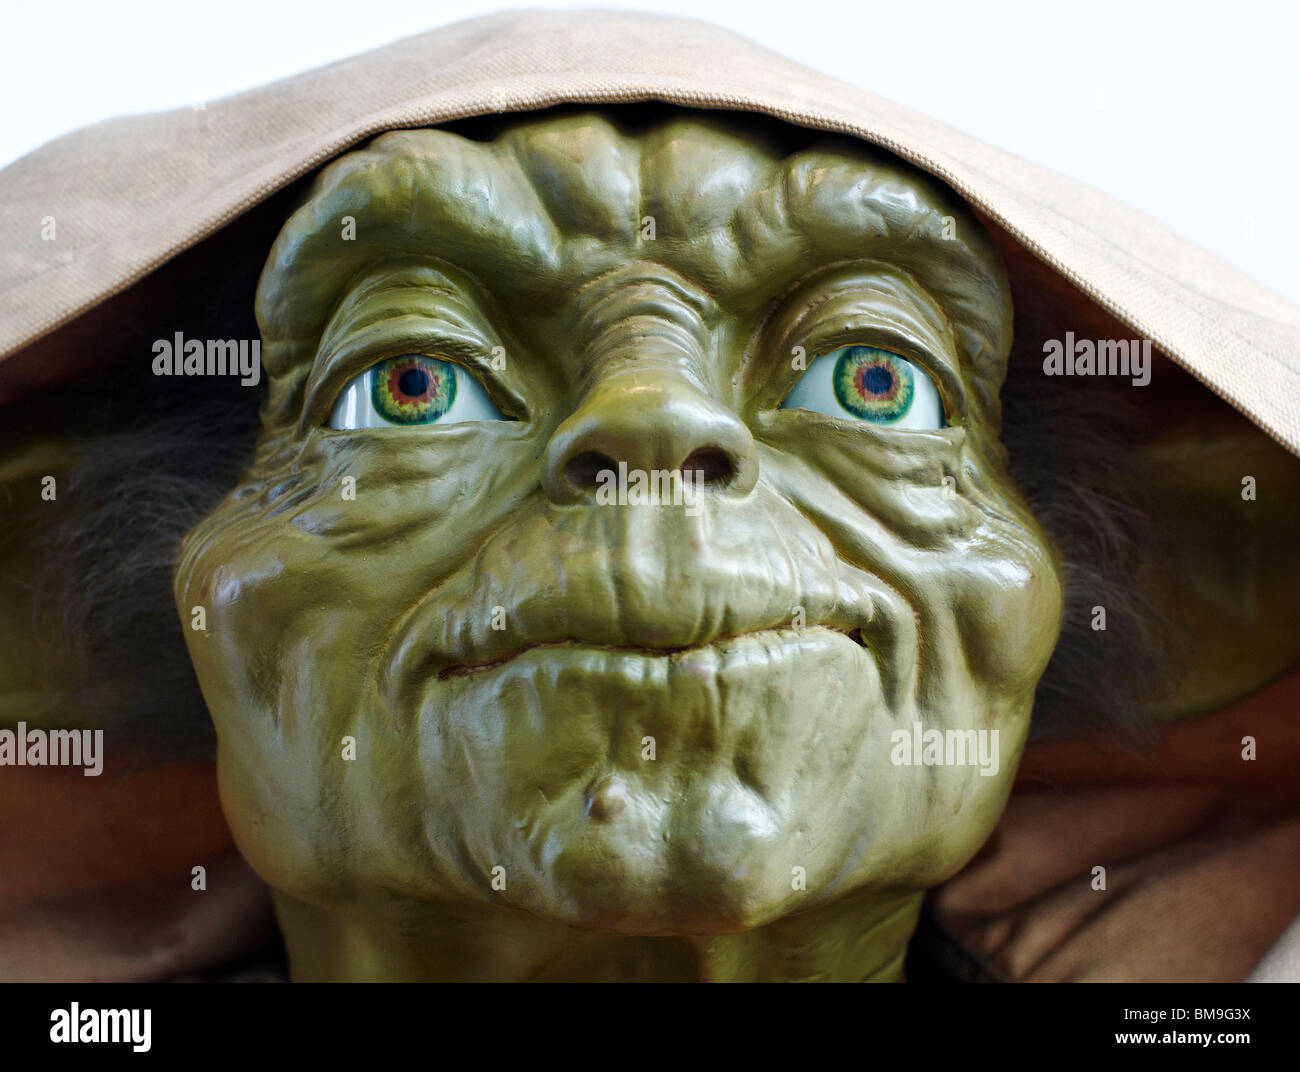 Master Yoda, Star Wars alien face close up Stock Photo